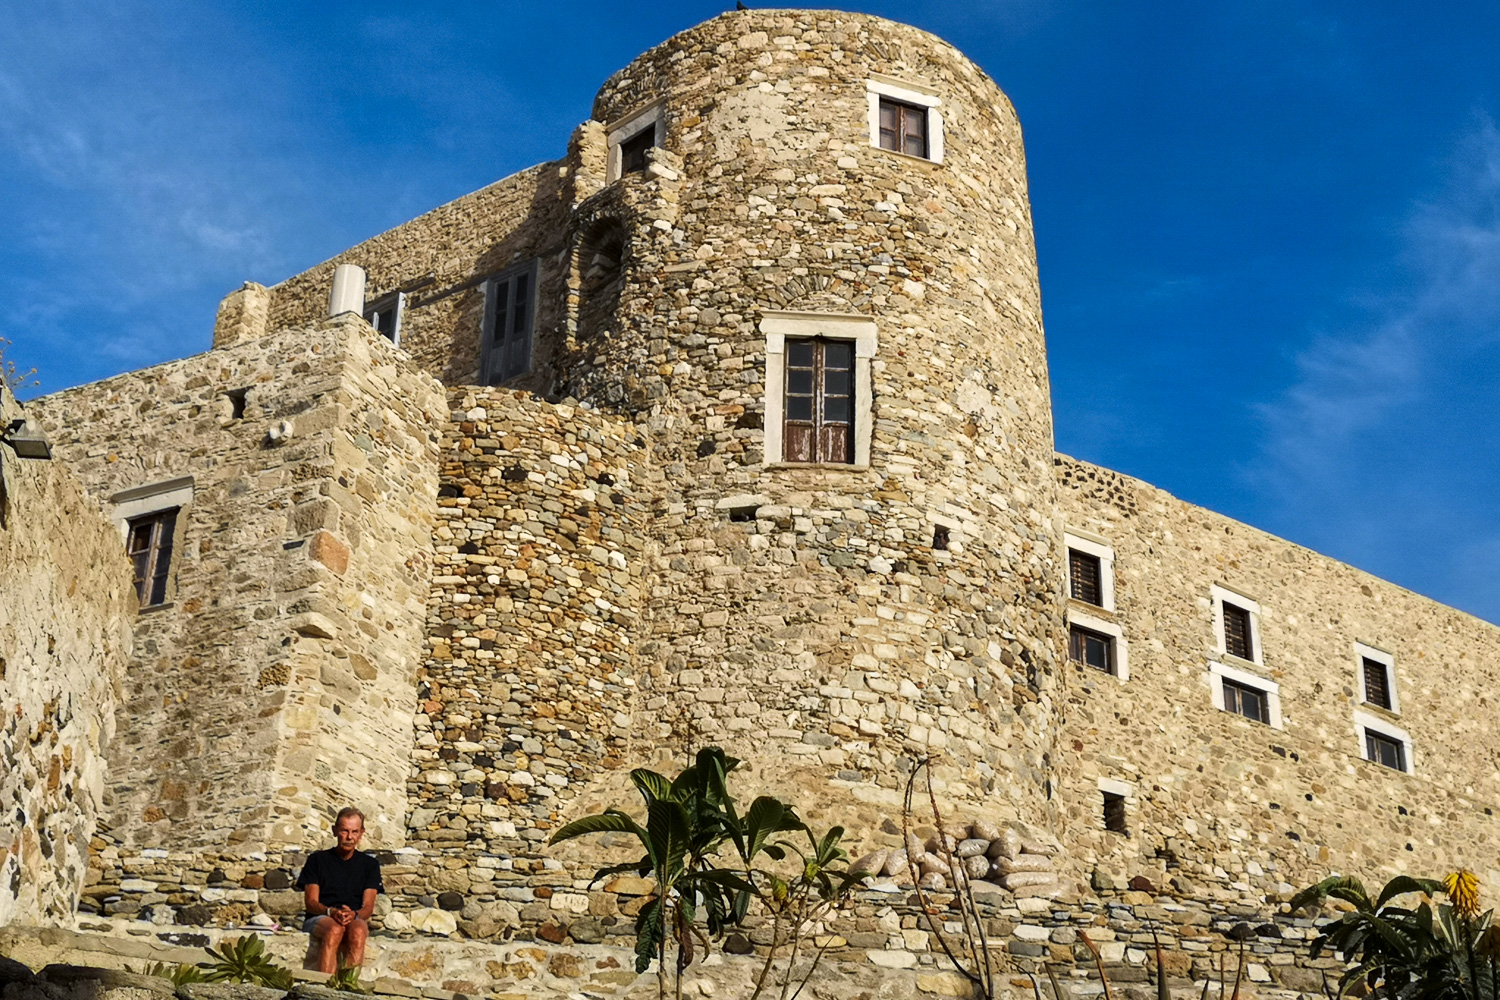 The castle in Naxos Greece